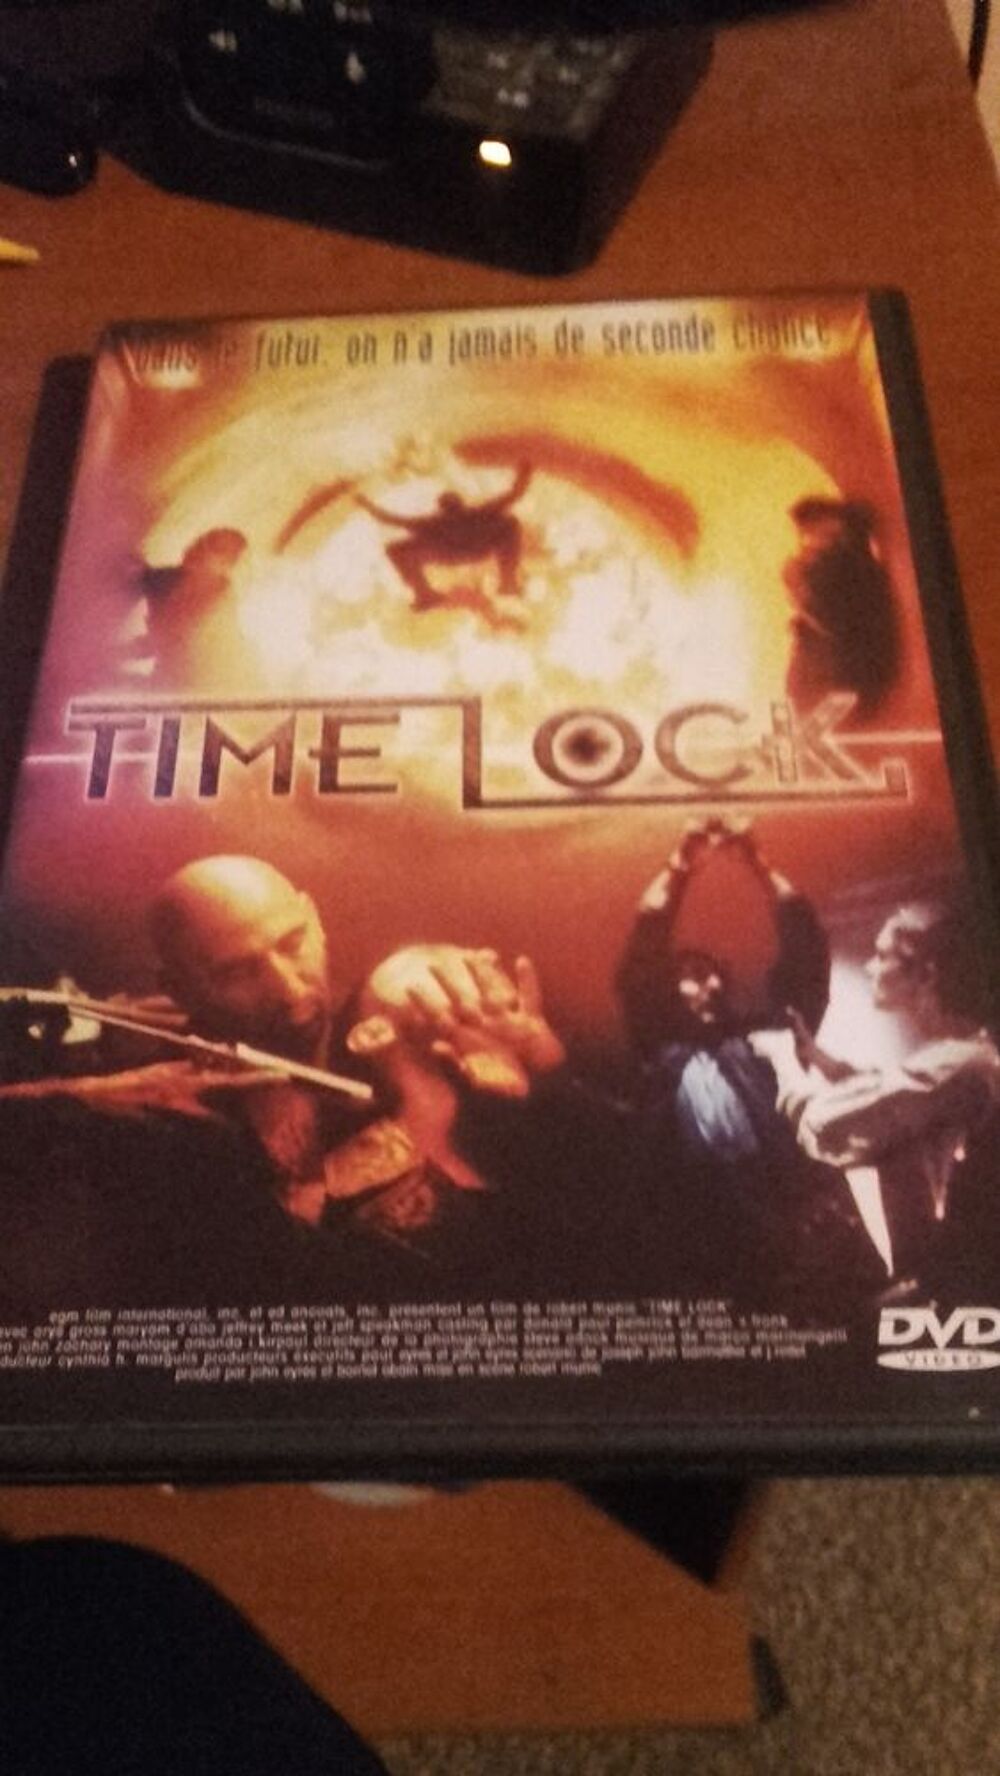 DVD Time Lock. Livraison possible DVD et blu-ray